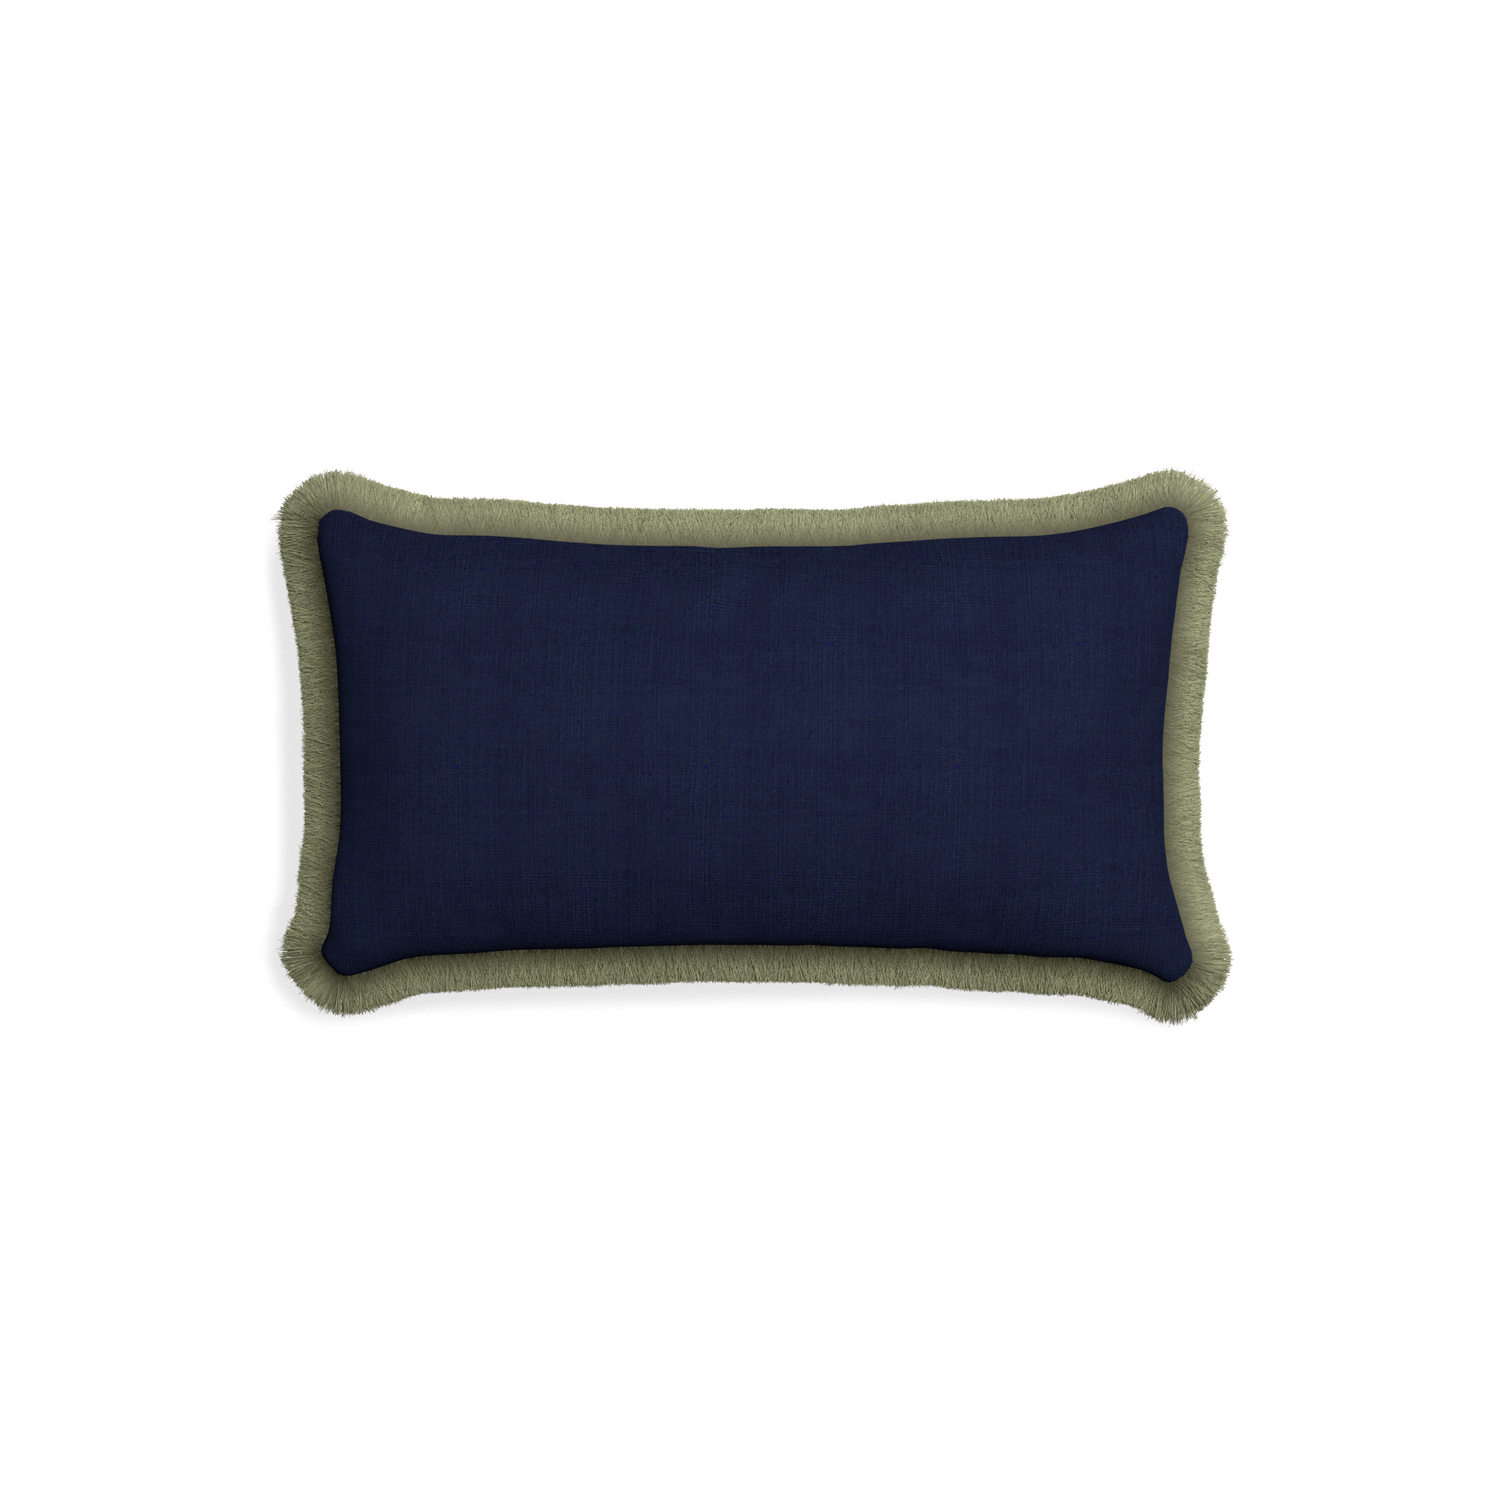 Petite-lumbar midnight custom navy bluepillow with sage fringe on white background